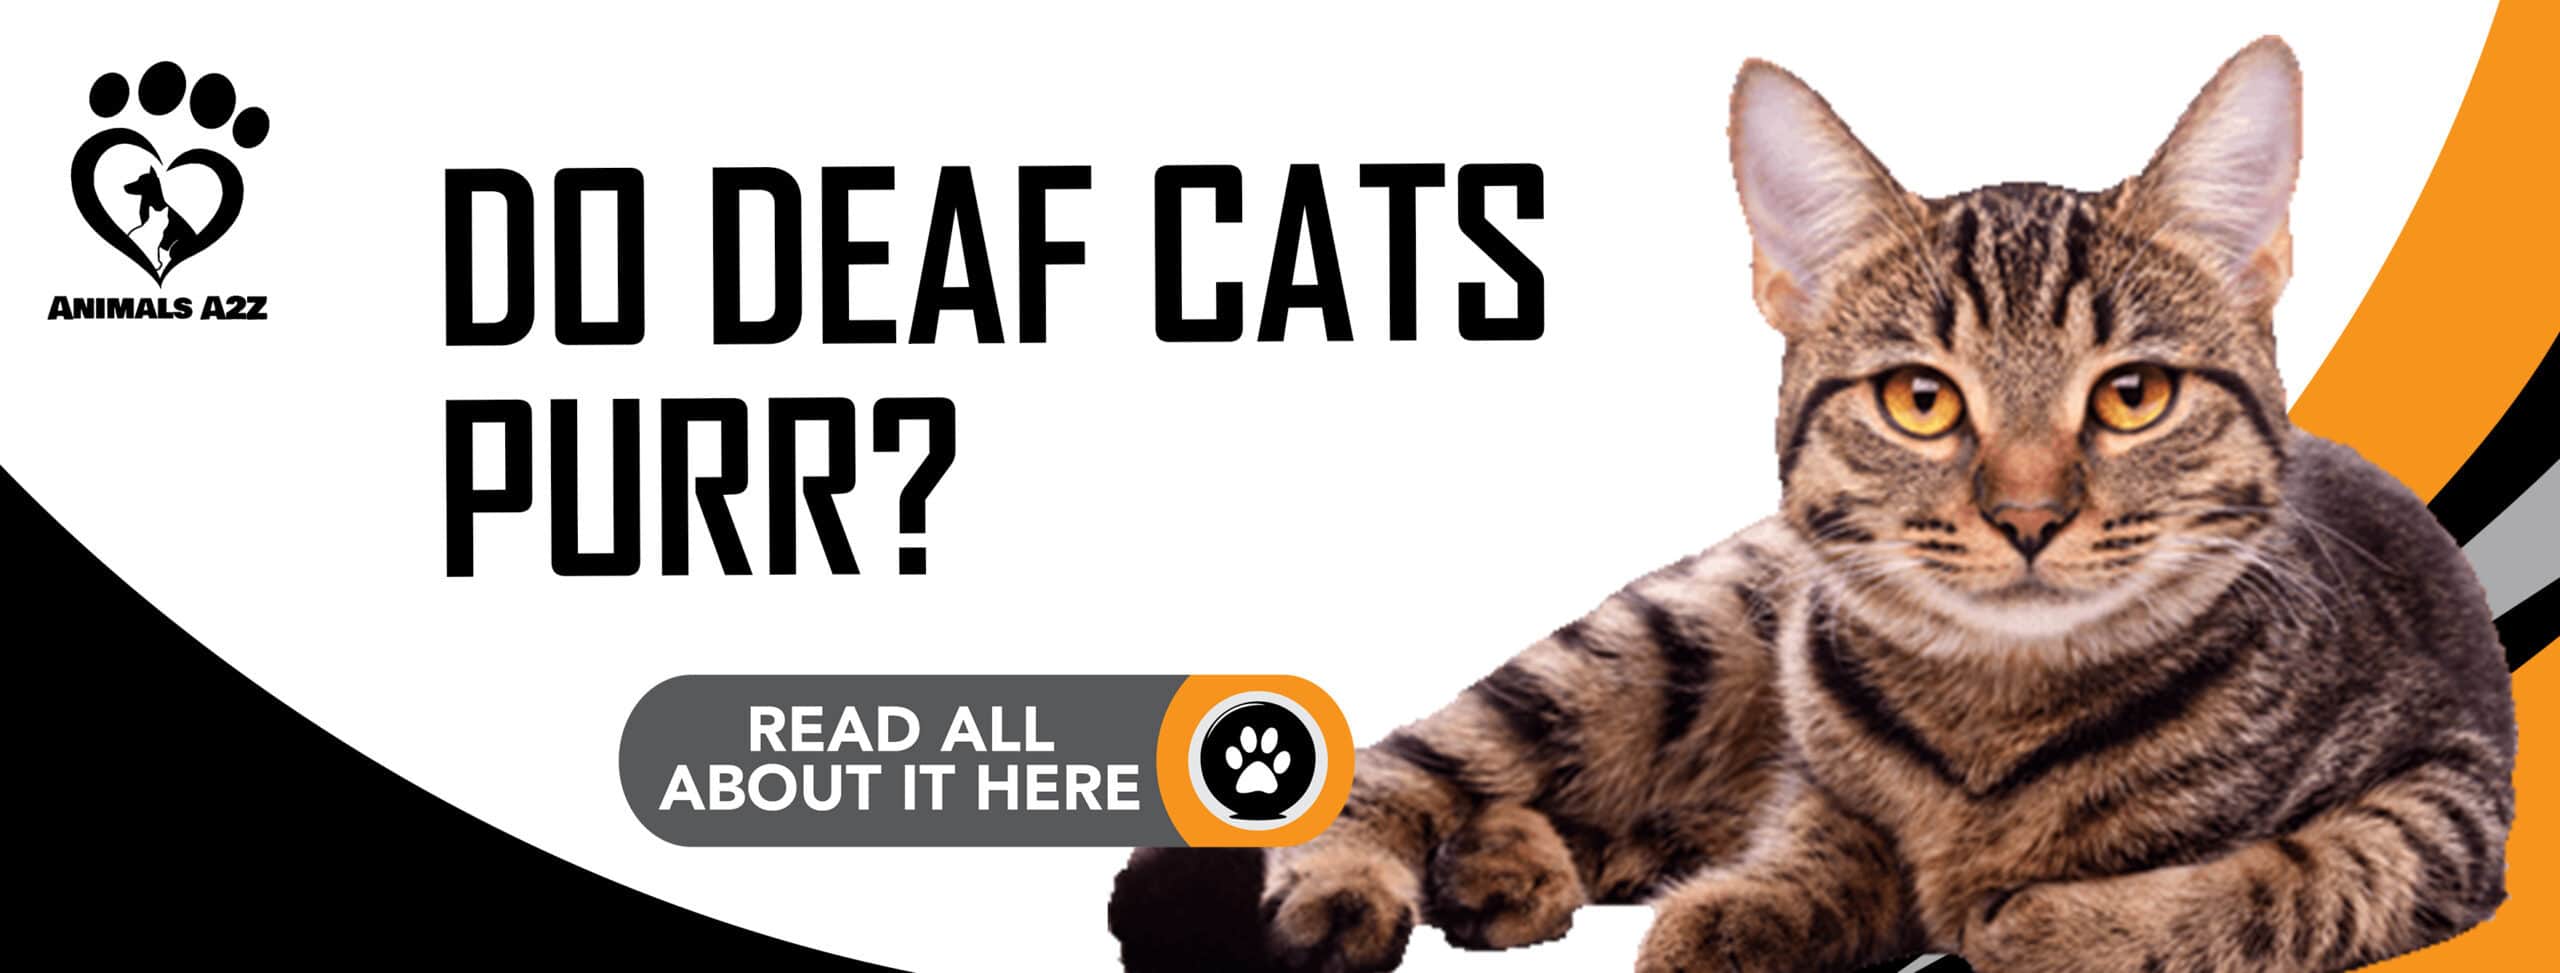 Do deaf cats purr?